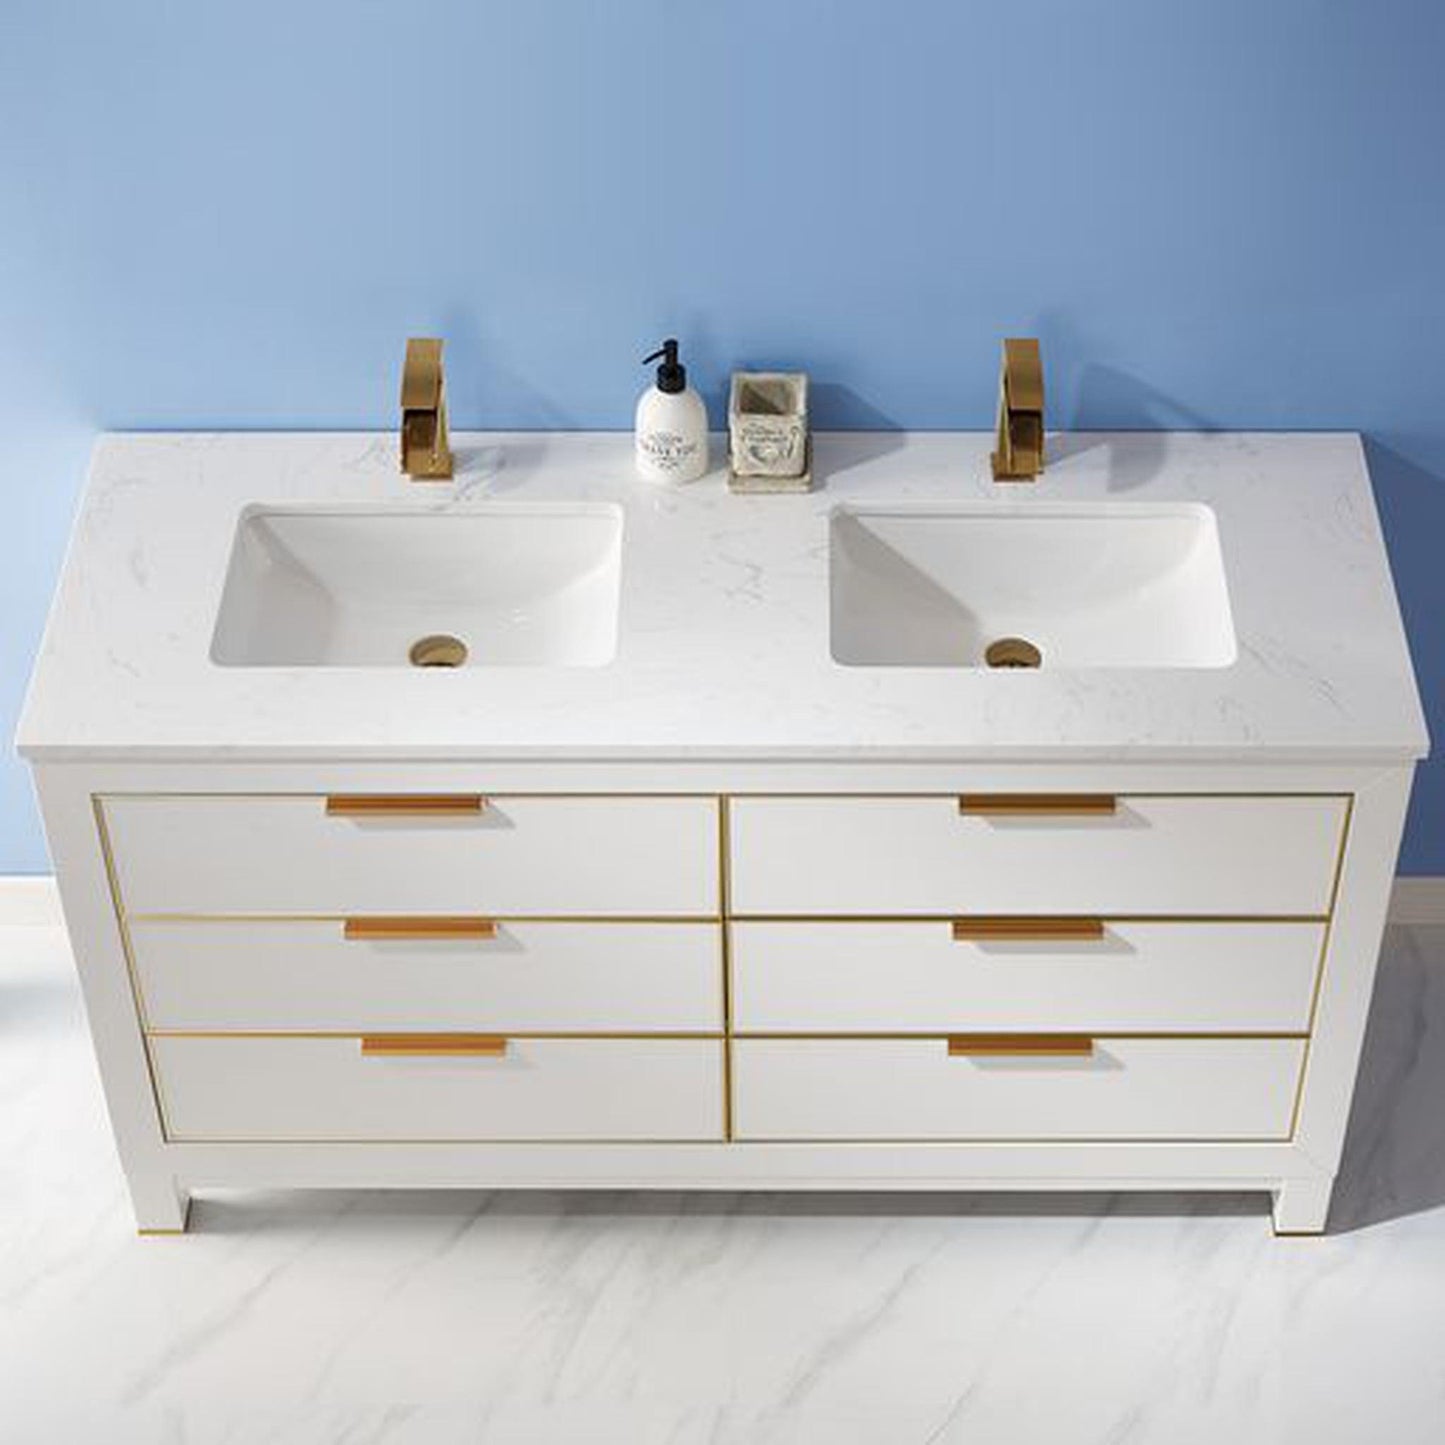 Altair Jackson 60" Double White Freestanding Bathroom Vanity Set With Aosta White Composite Stone Top, Two Rectangular Undermount Ceramic Sinks, and Overflow